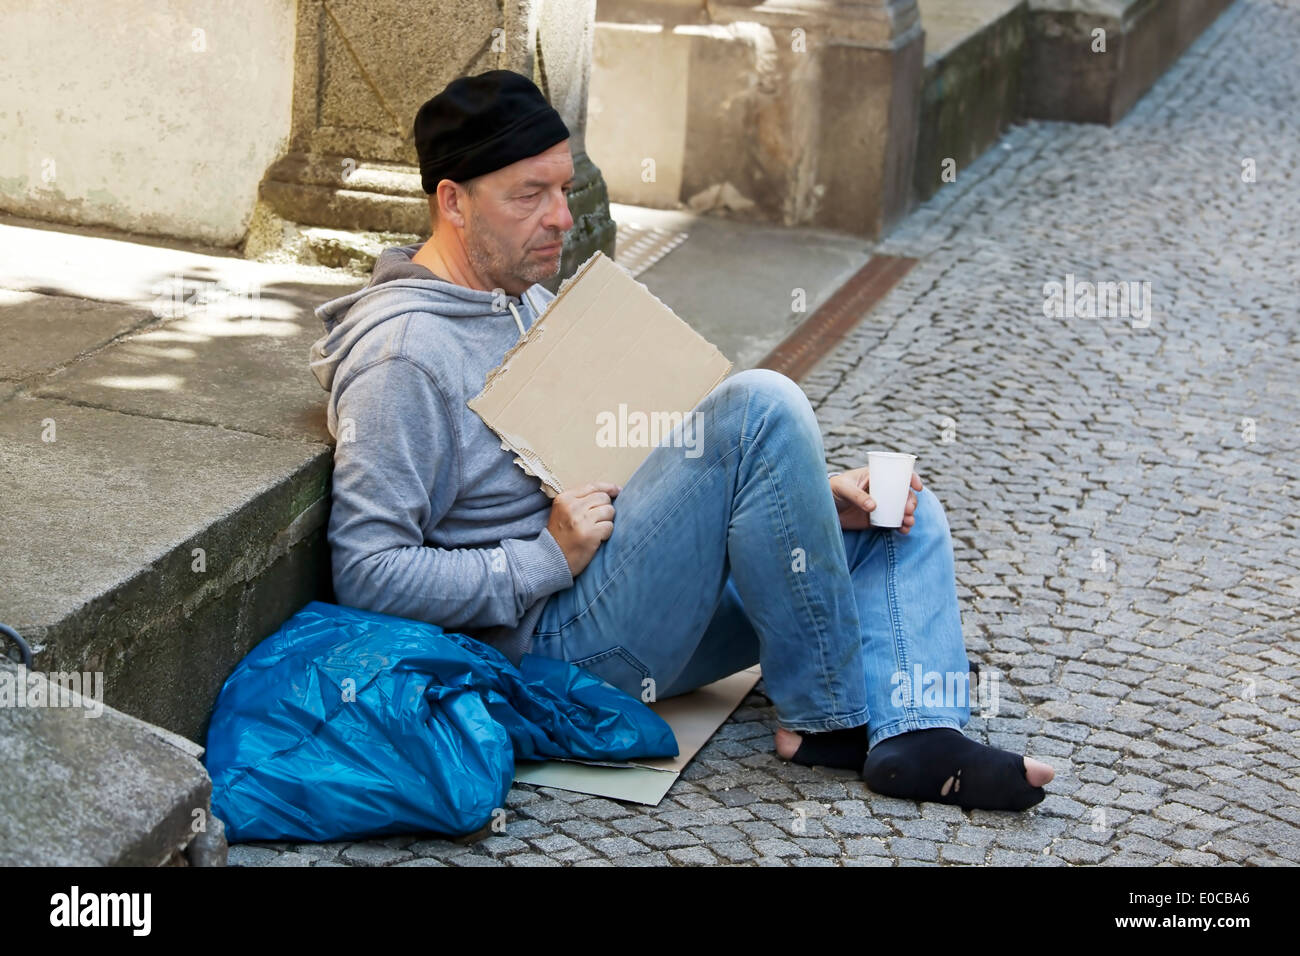 Un mendigo sin hogar desempleados y hambrientos, ist ein arbeitsloser Bettler Obdachlos und hat hambre Foto de stock